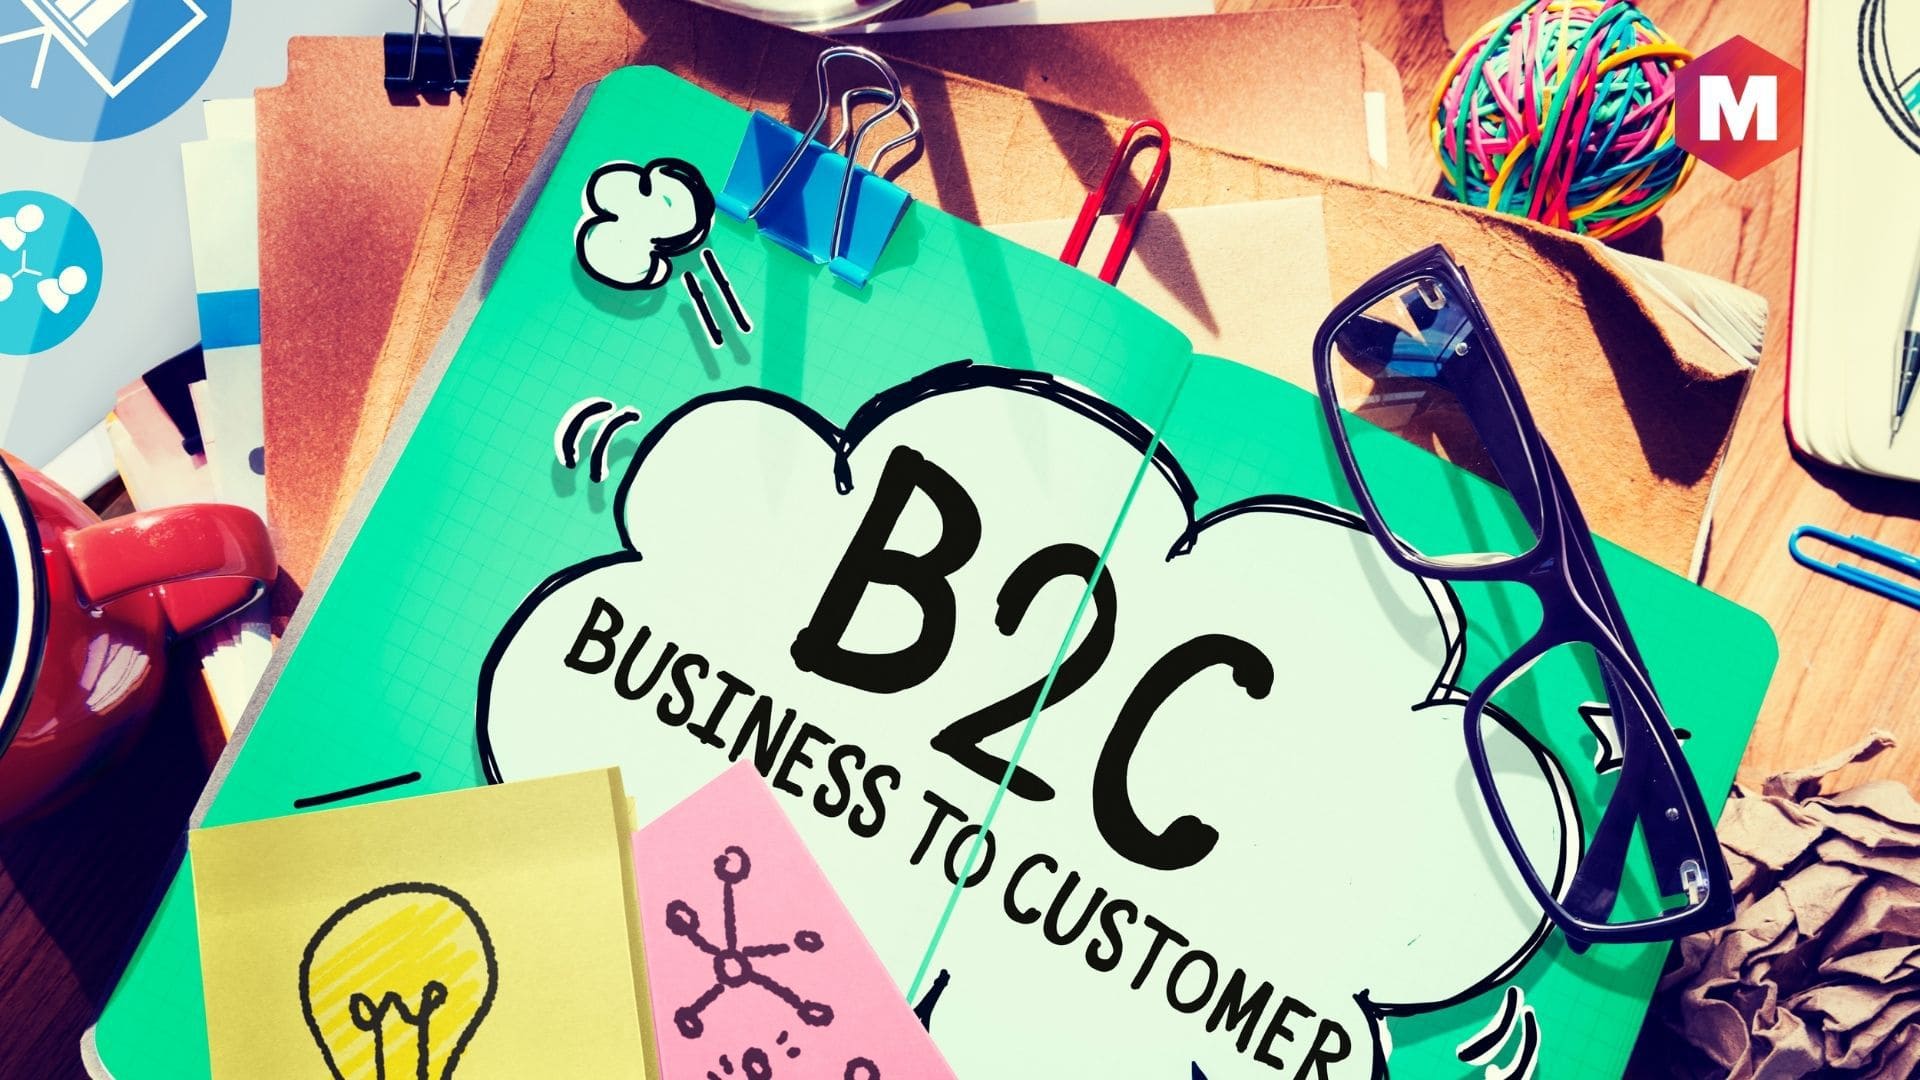 btc business to consumer definition